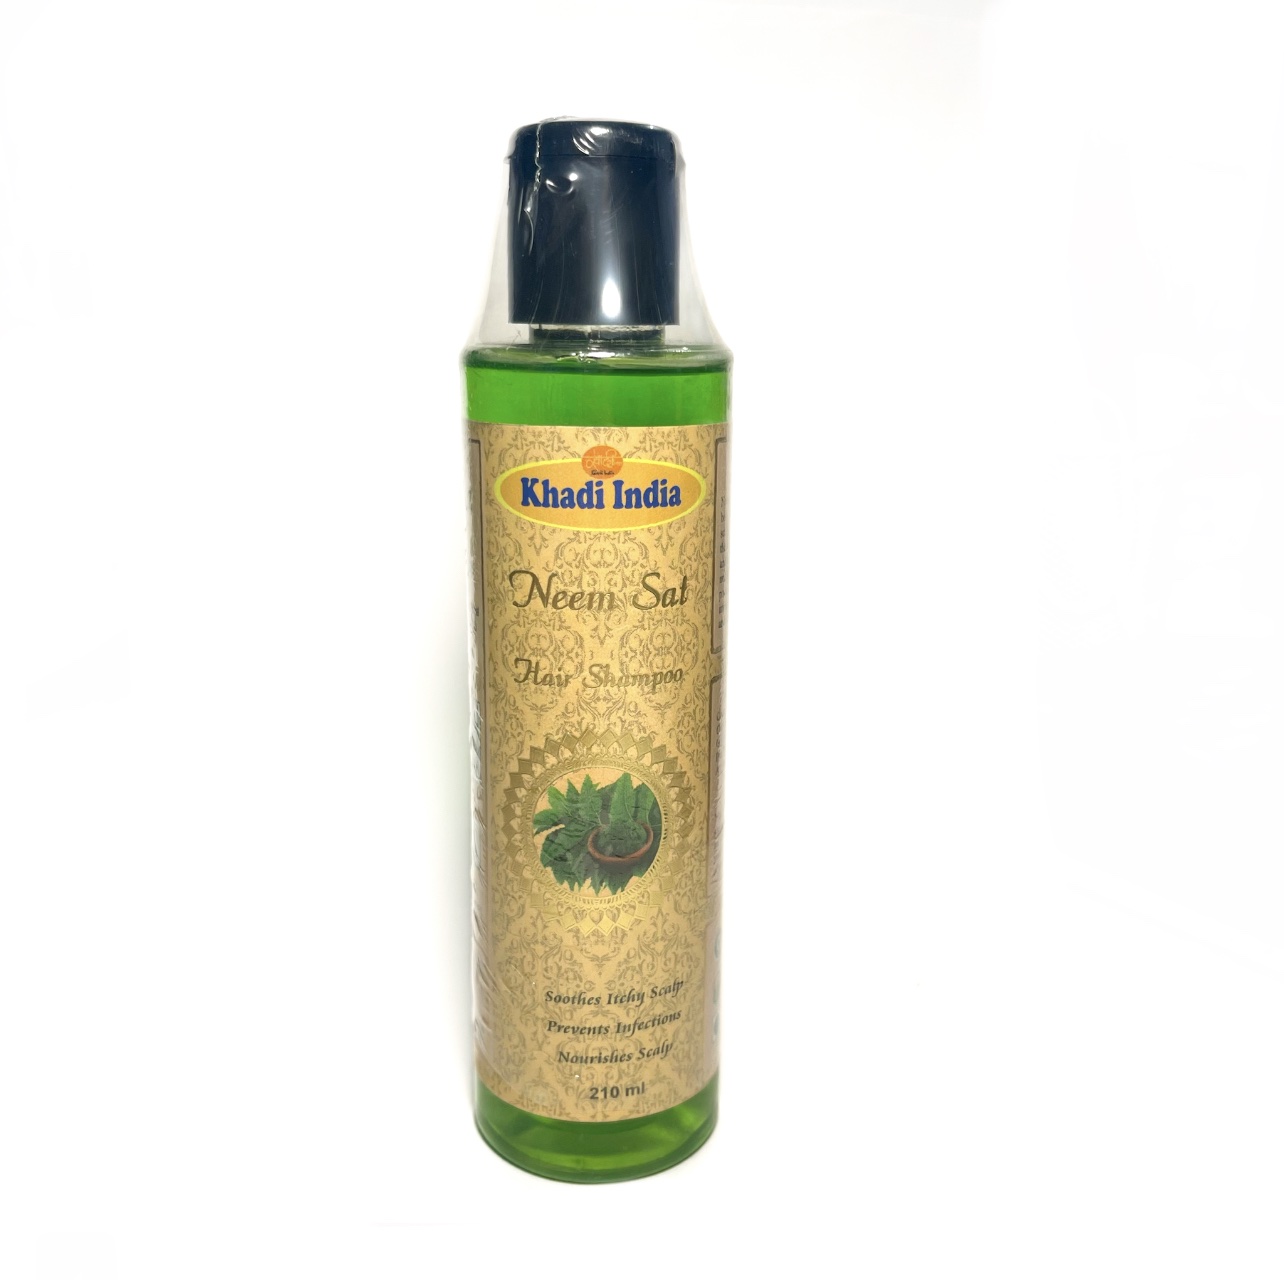 NEEM SAT Herbal Shampoo, Khadi India (НИМ САТ шампунь для волос, Кхади Индия), 210 мл.